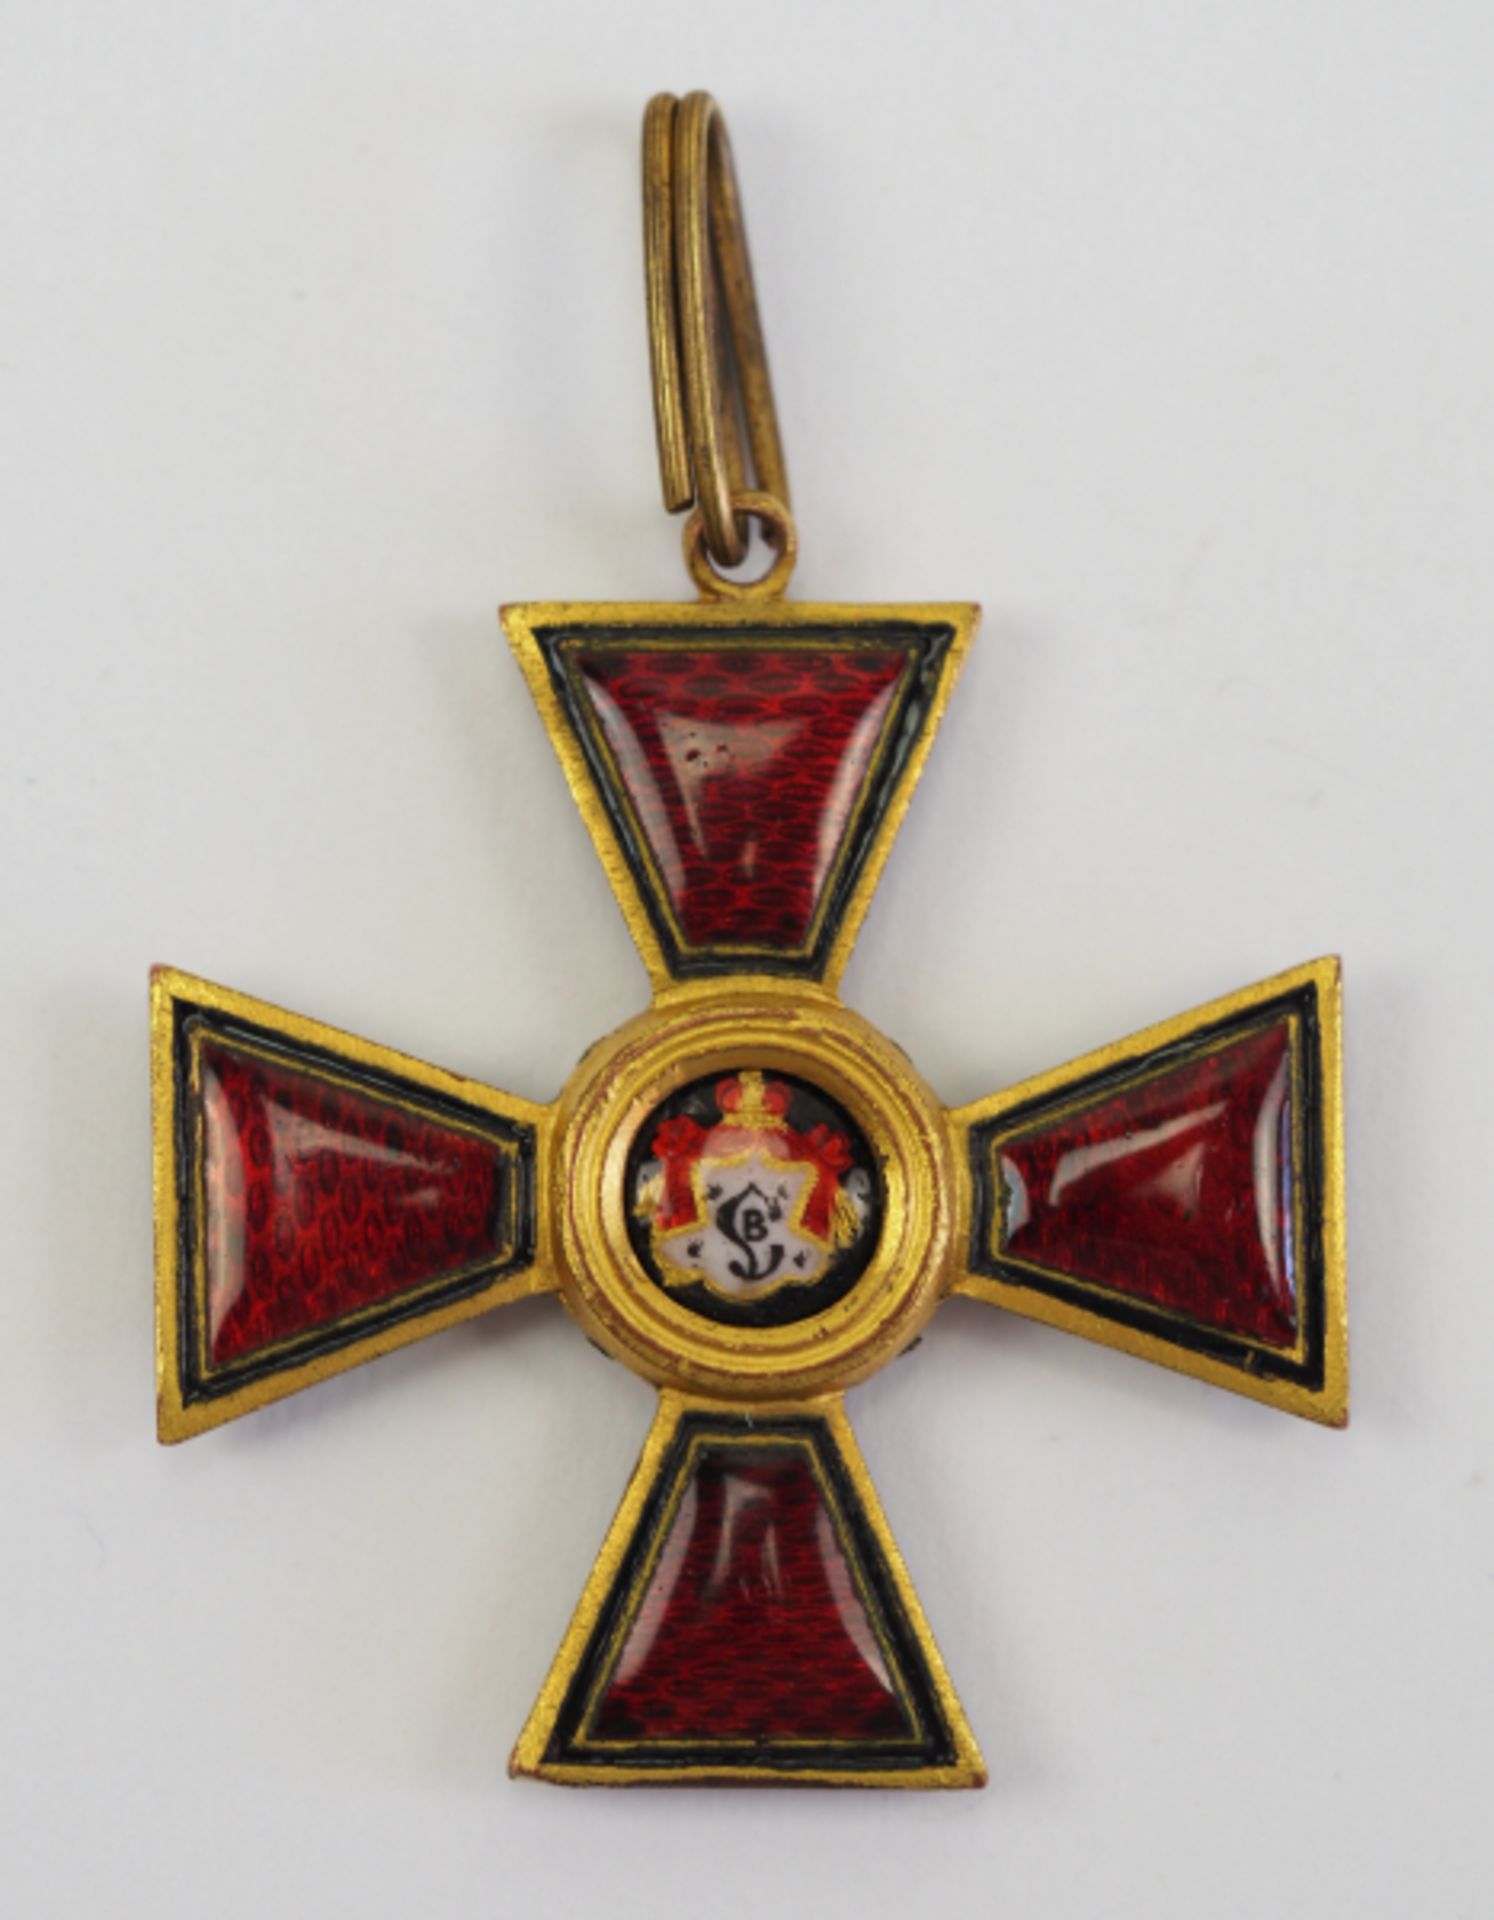 Russland: St. Wladimir Orden, 3. Klasse.Bronze vergoldet, teilweise emailliert, separat